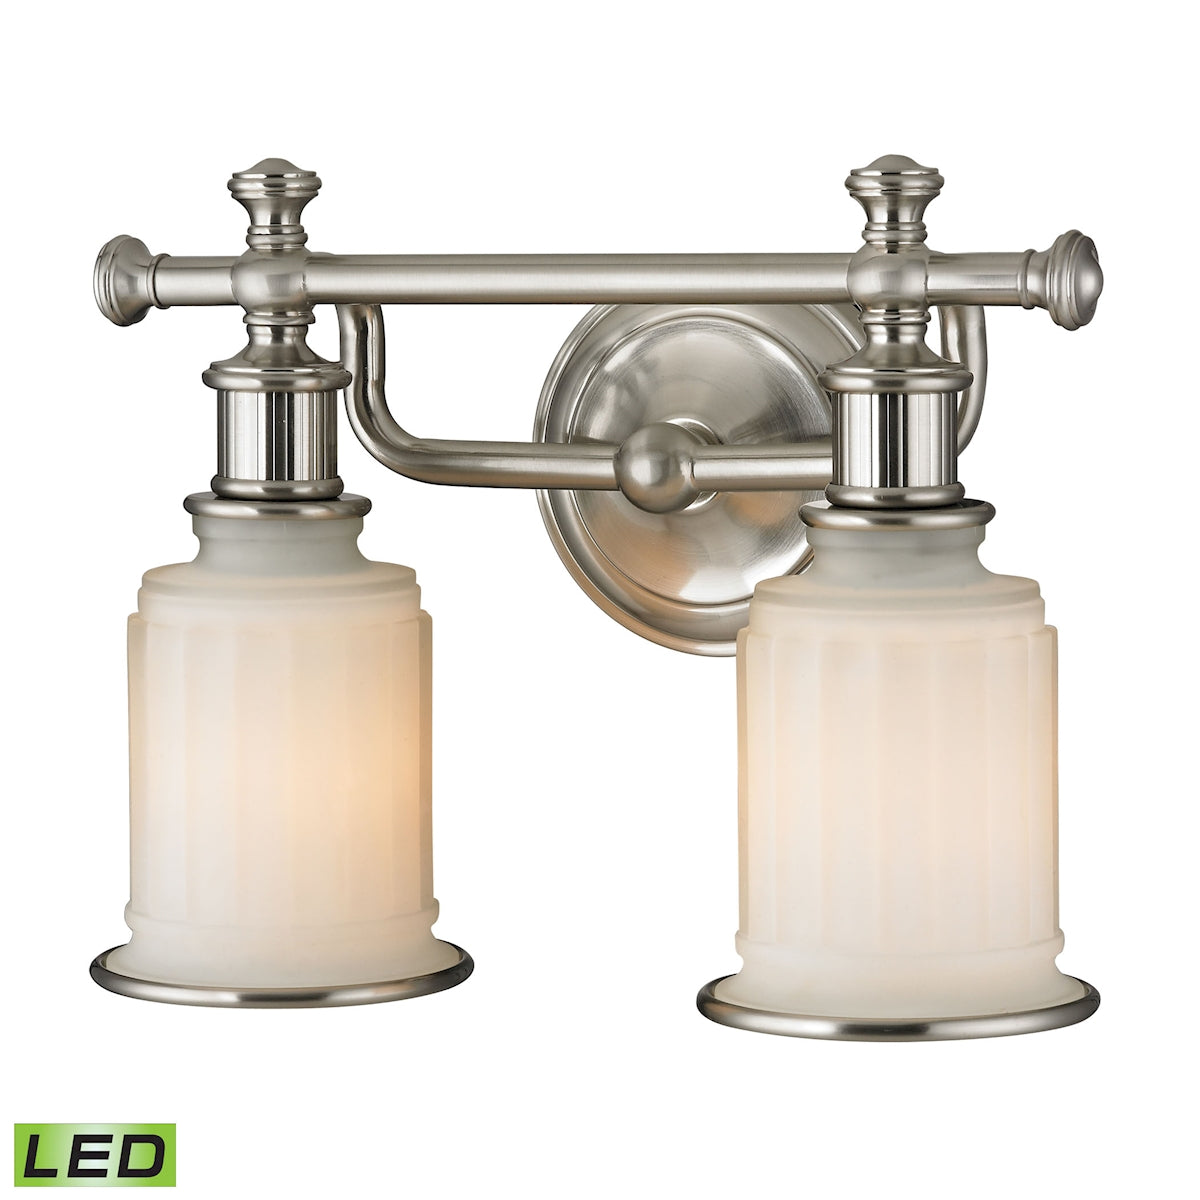 ELK Lighting 52001/2-LED Acadia 2-Light Vanity Lamp in Brushed Nickel with Opal Reeded Pressed Glass - Includes LED Bulbs